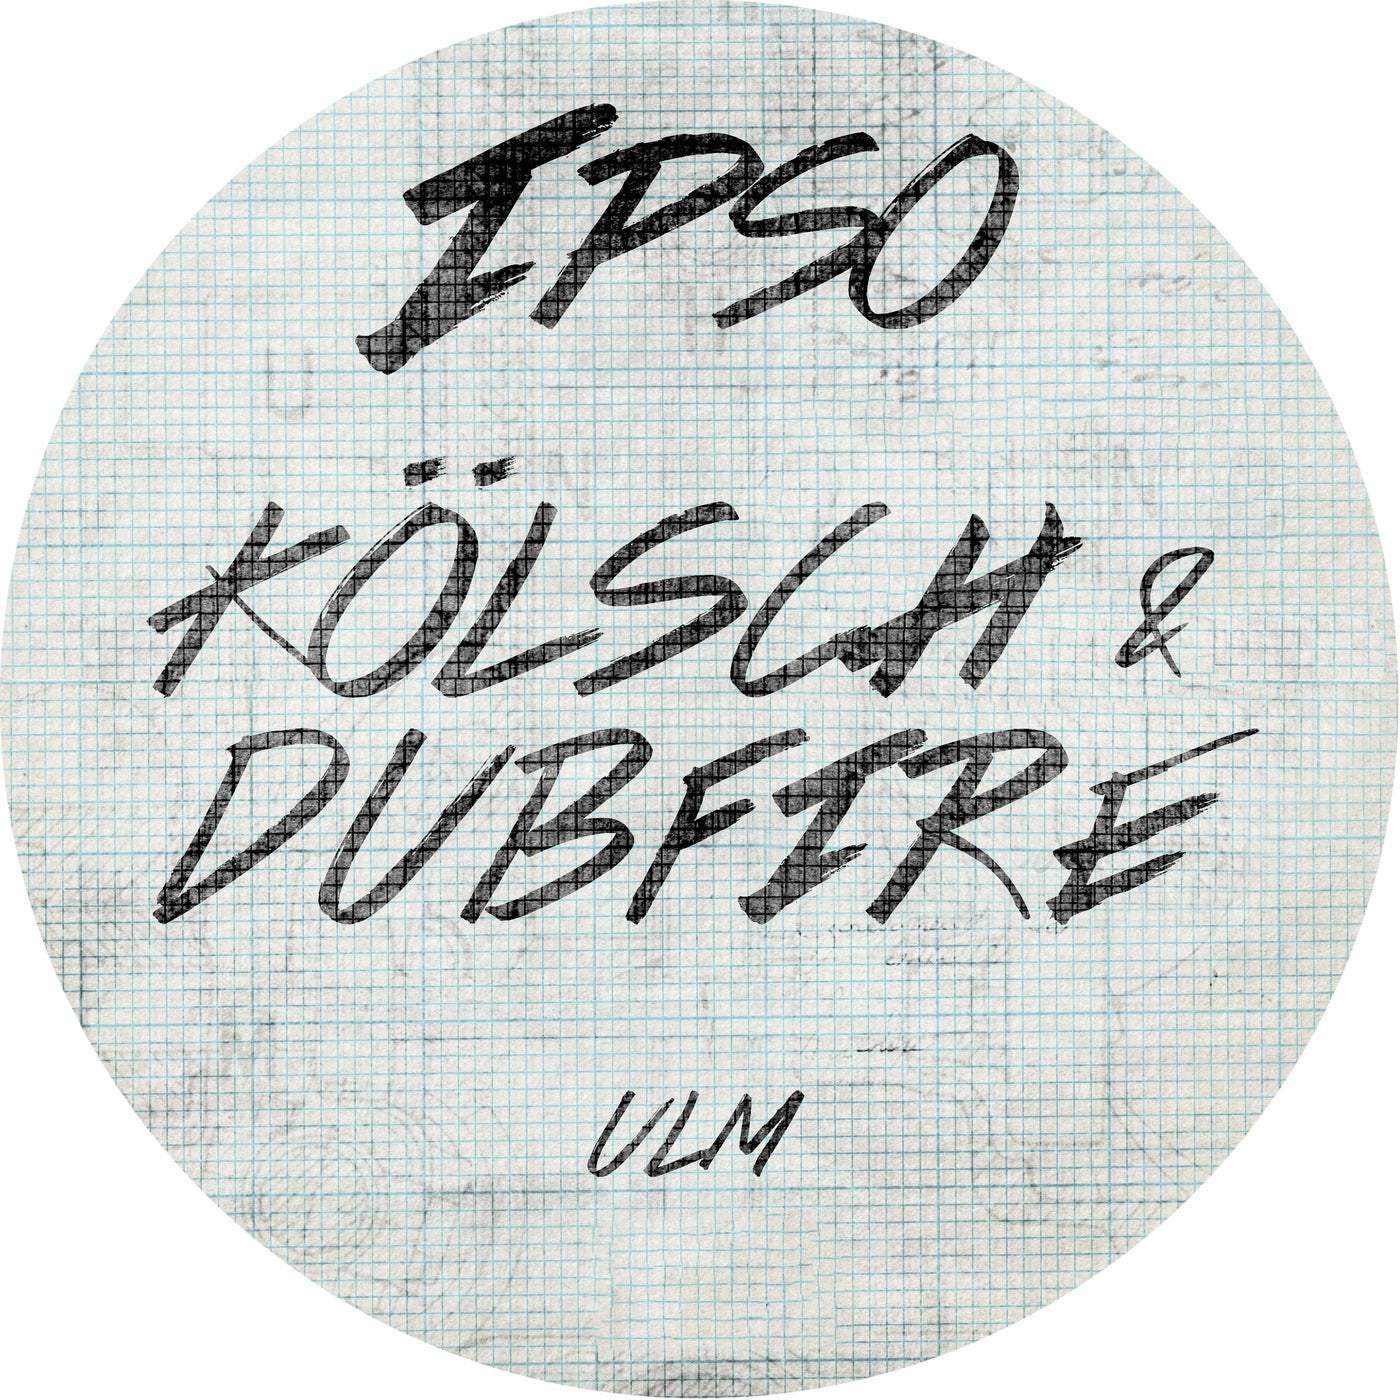 image cover: Dubfire, Kolsch - Ulm / IPSO0072